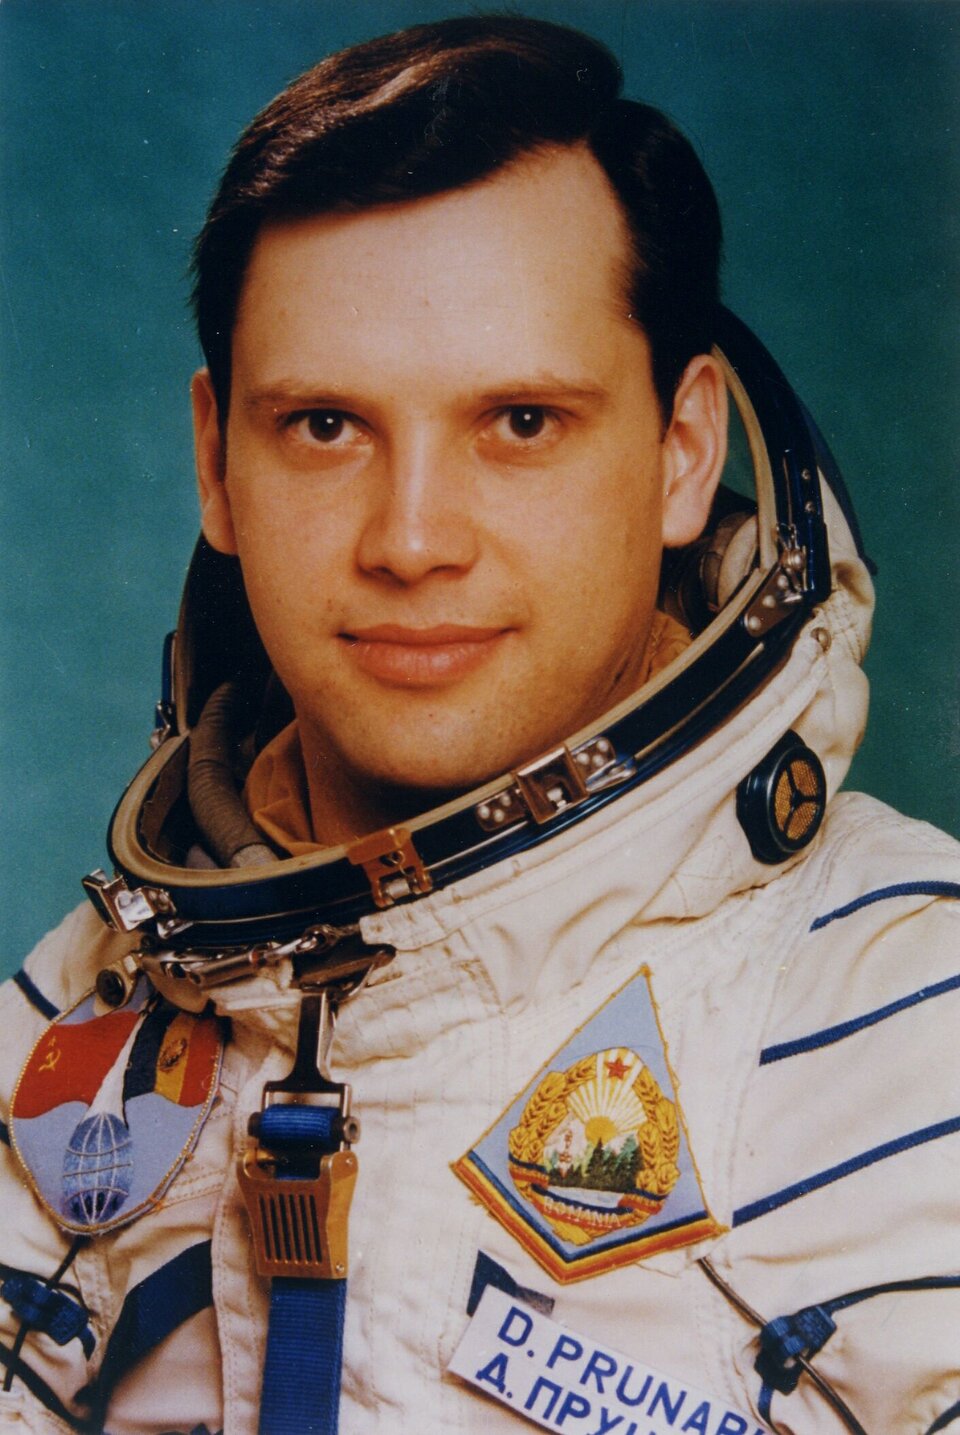 Romanian cosmonaut Dumitru Dorin Prunariu